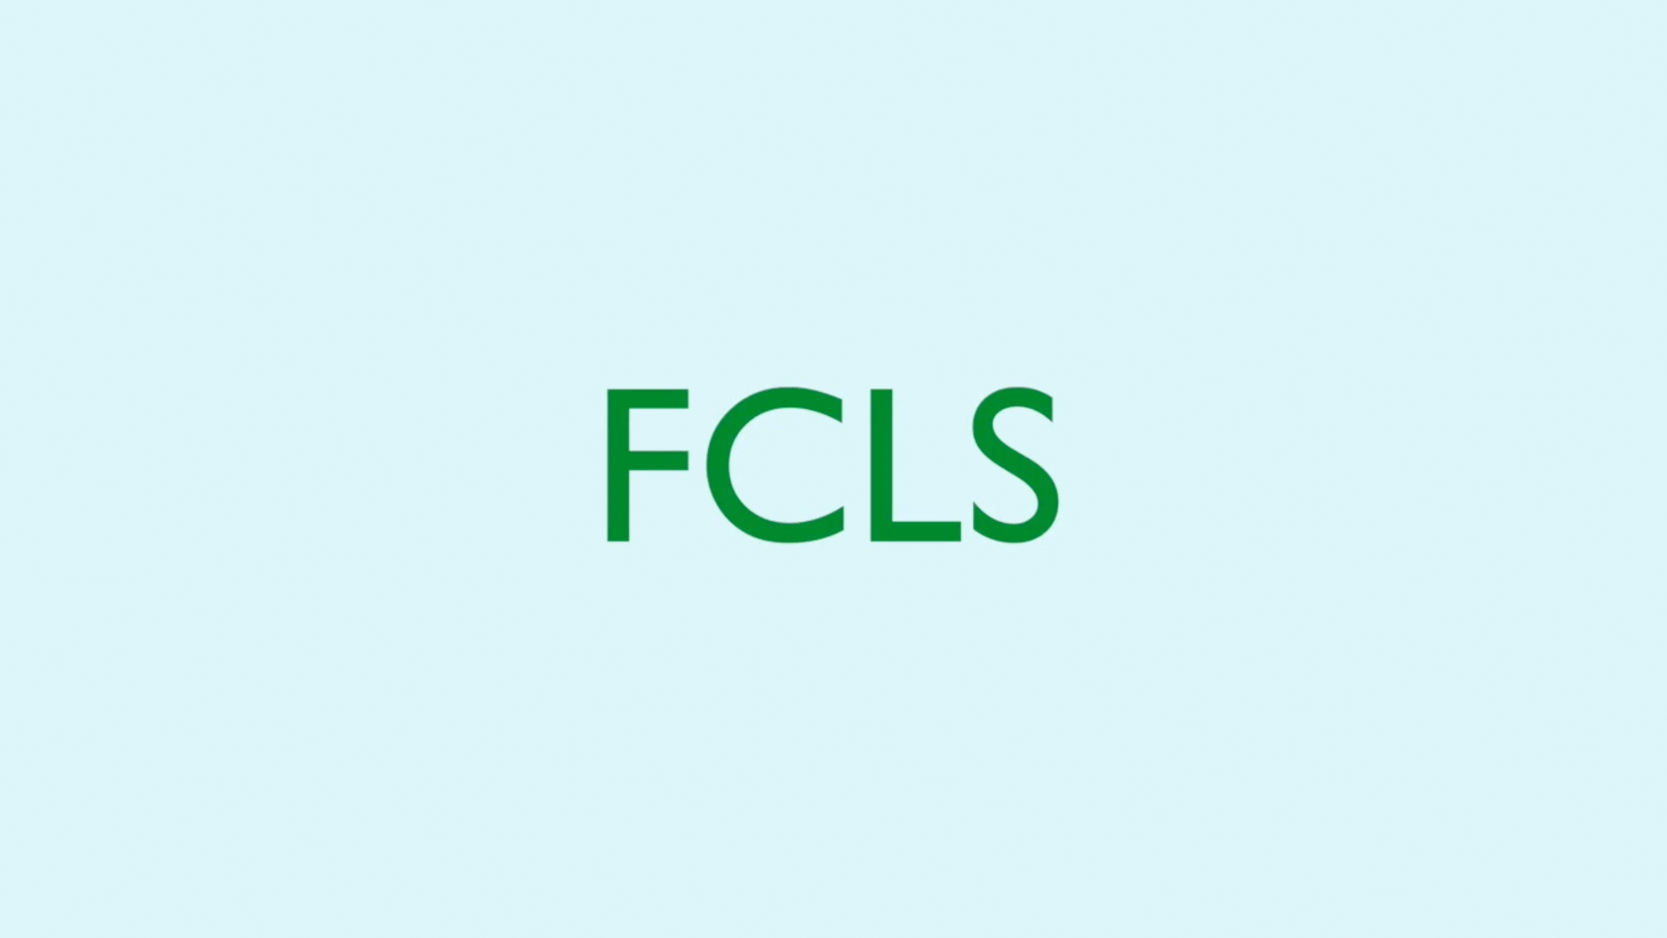 FCLS Image